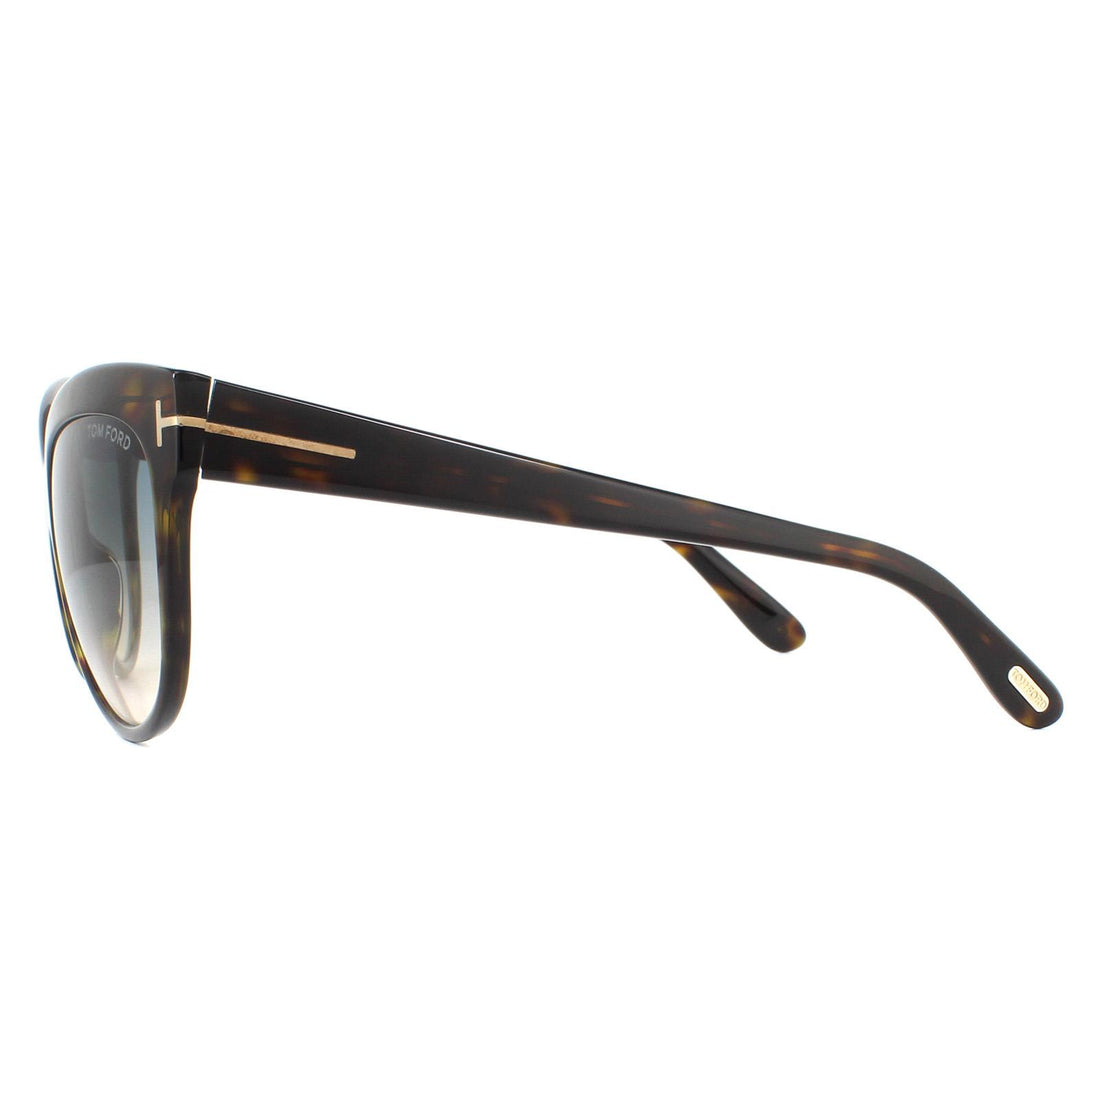 Tom Ford Sunglasses Lily FT0430 52P Dark Havana Green Gradient